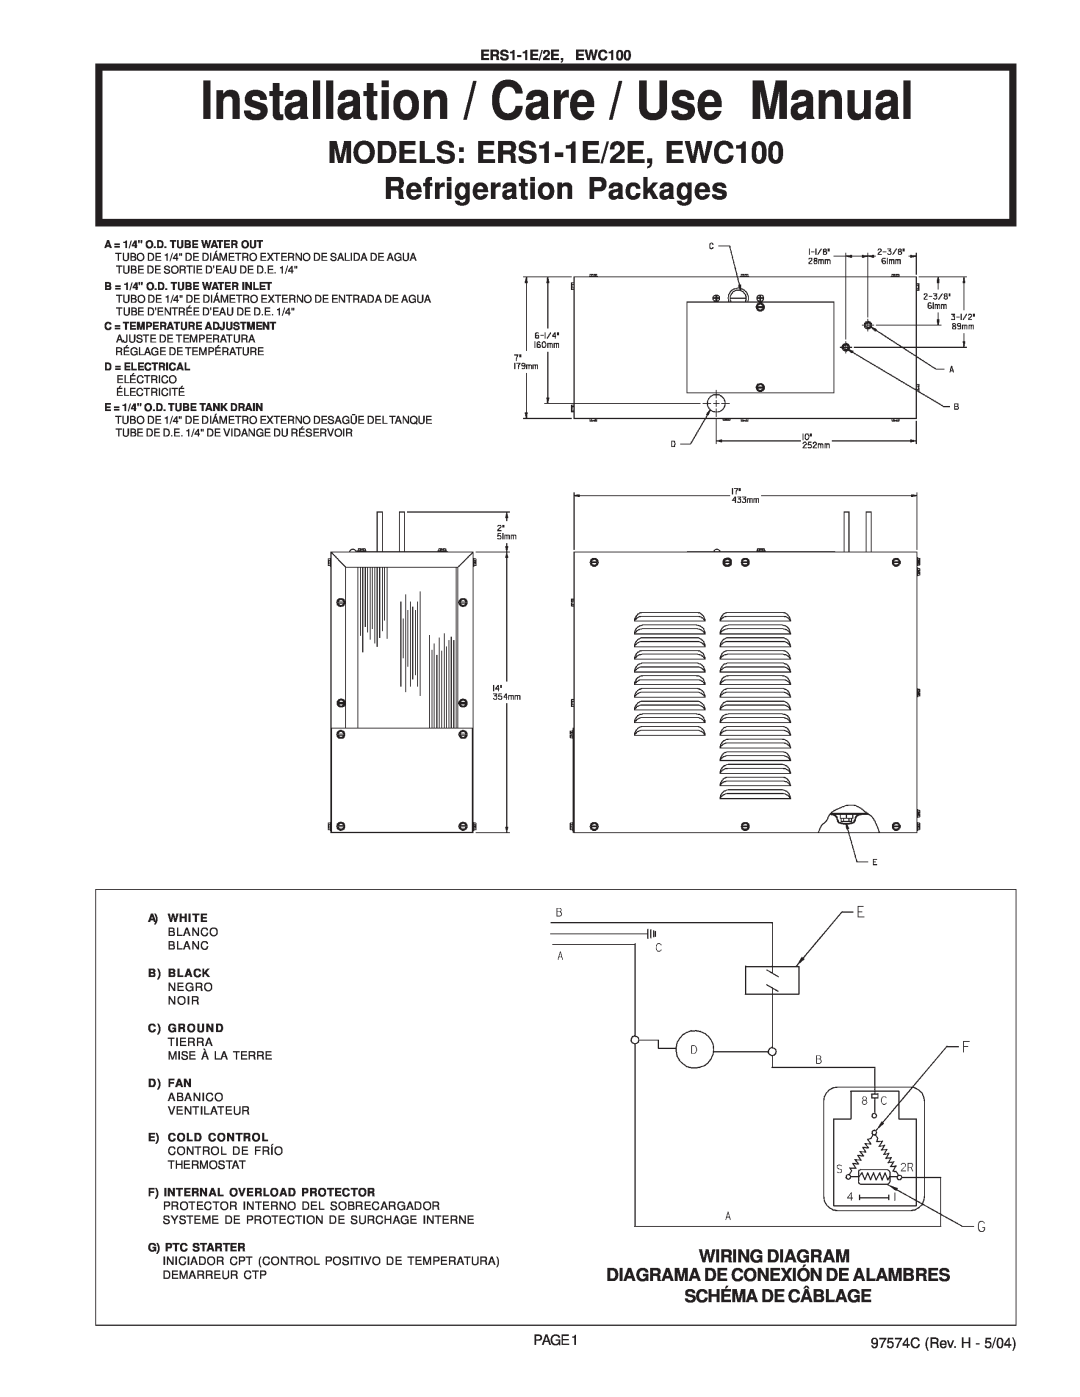 Elkay manual Installation / Care / Use Manual, MODELS ERS1-1E/2E,EWC100 Refrigeration Packages, Schéma De Câblage 